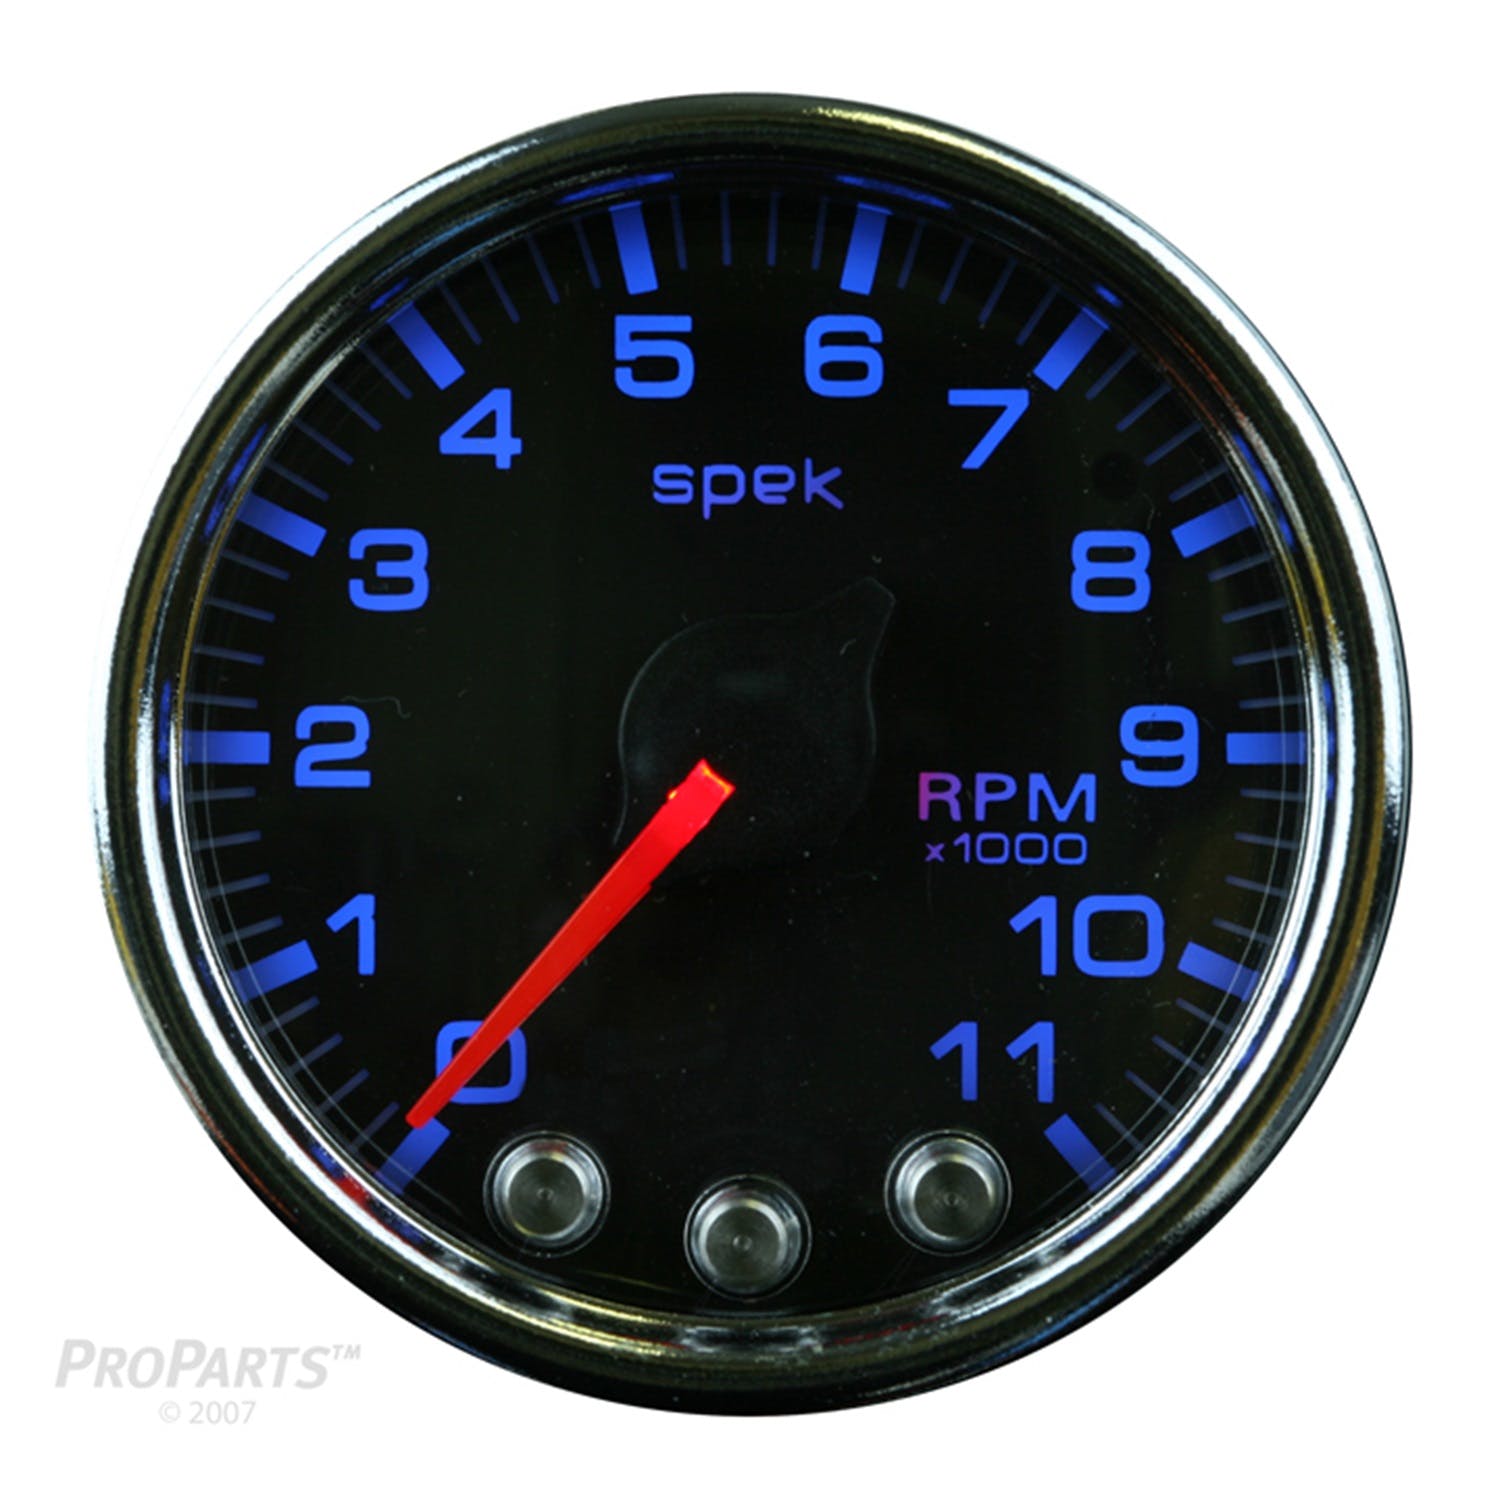 AutoMeter Products P33631 Tach 2in. 11k RPM w/Shift Light/Pk Mem Blk/Chrm Spek